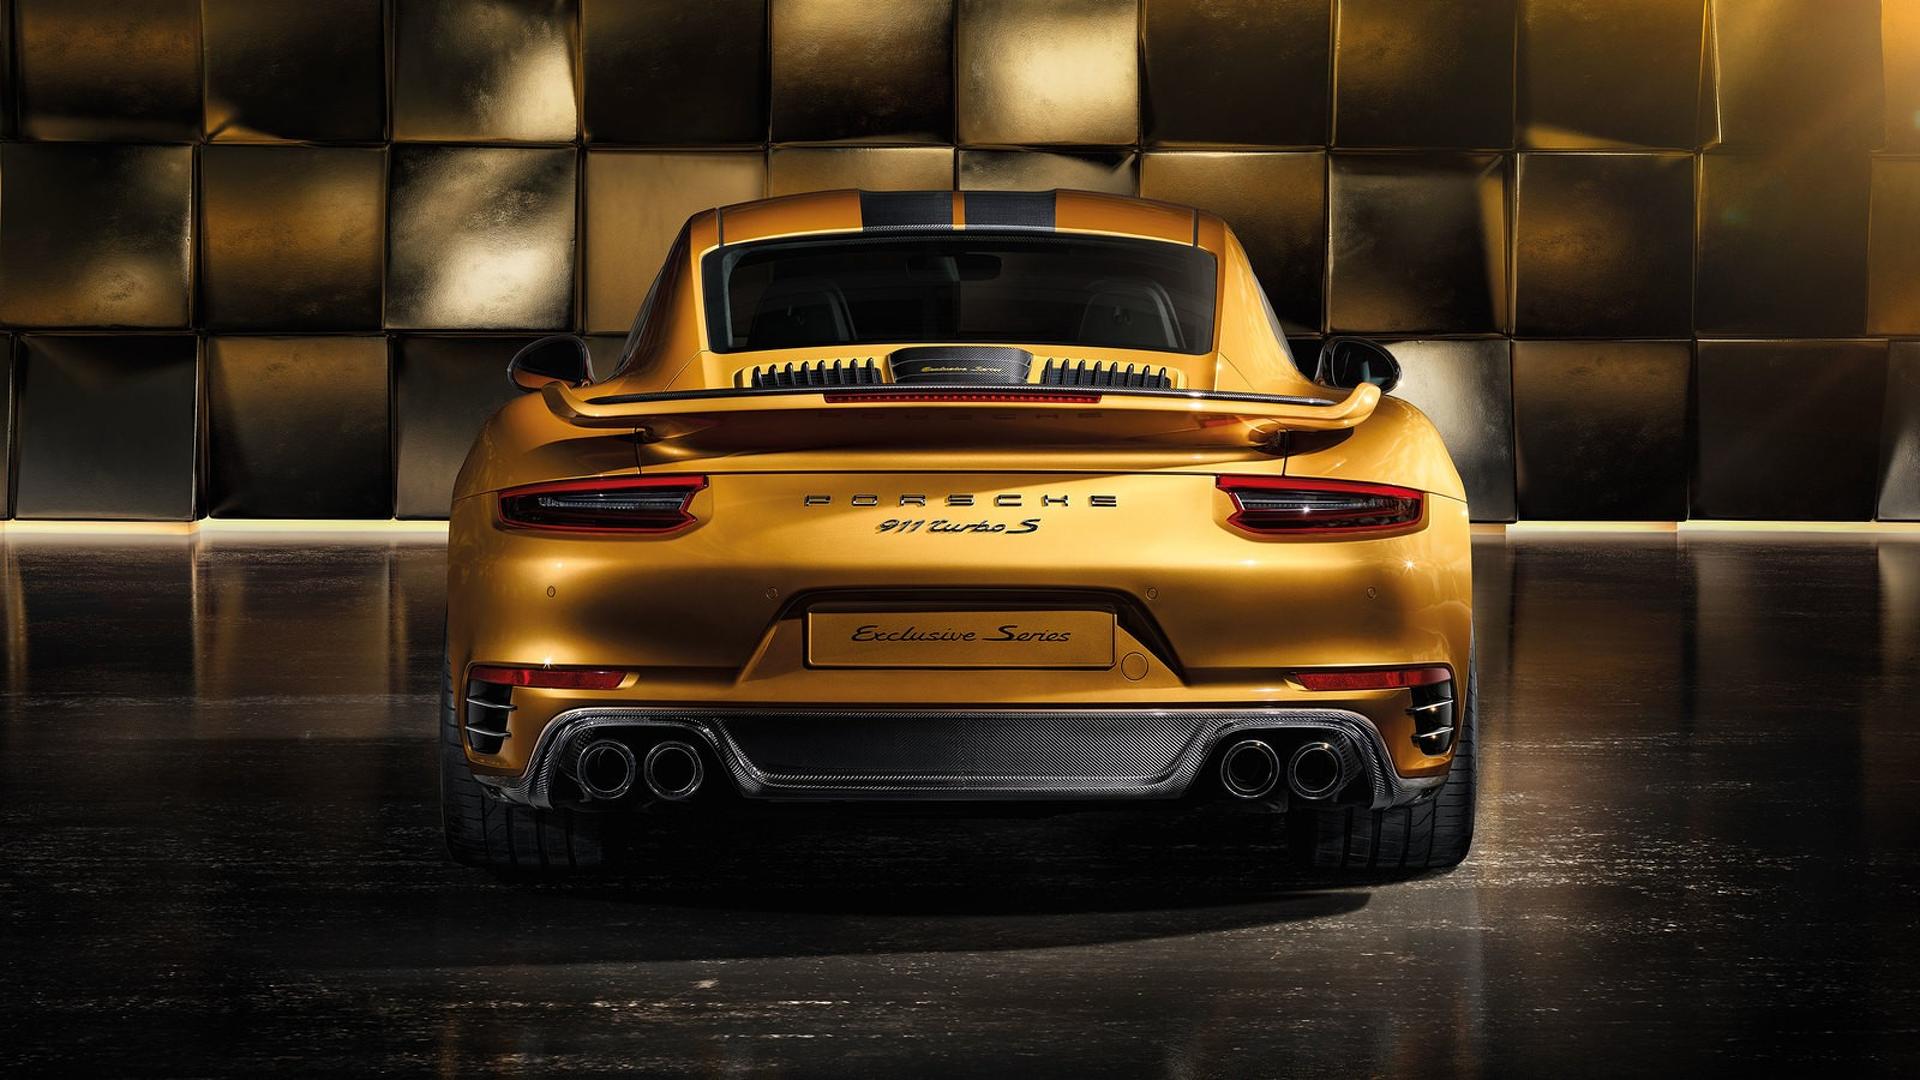 Porsche_911_Turbo_S_Exclusive_Series_11